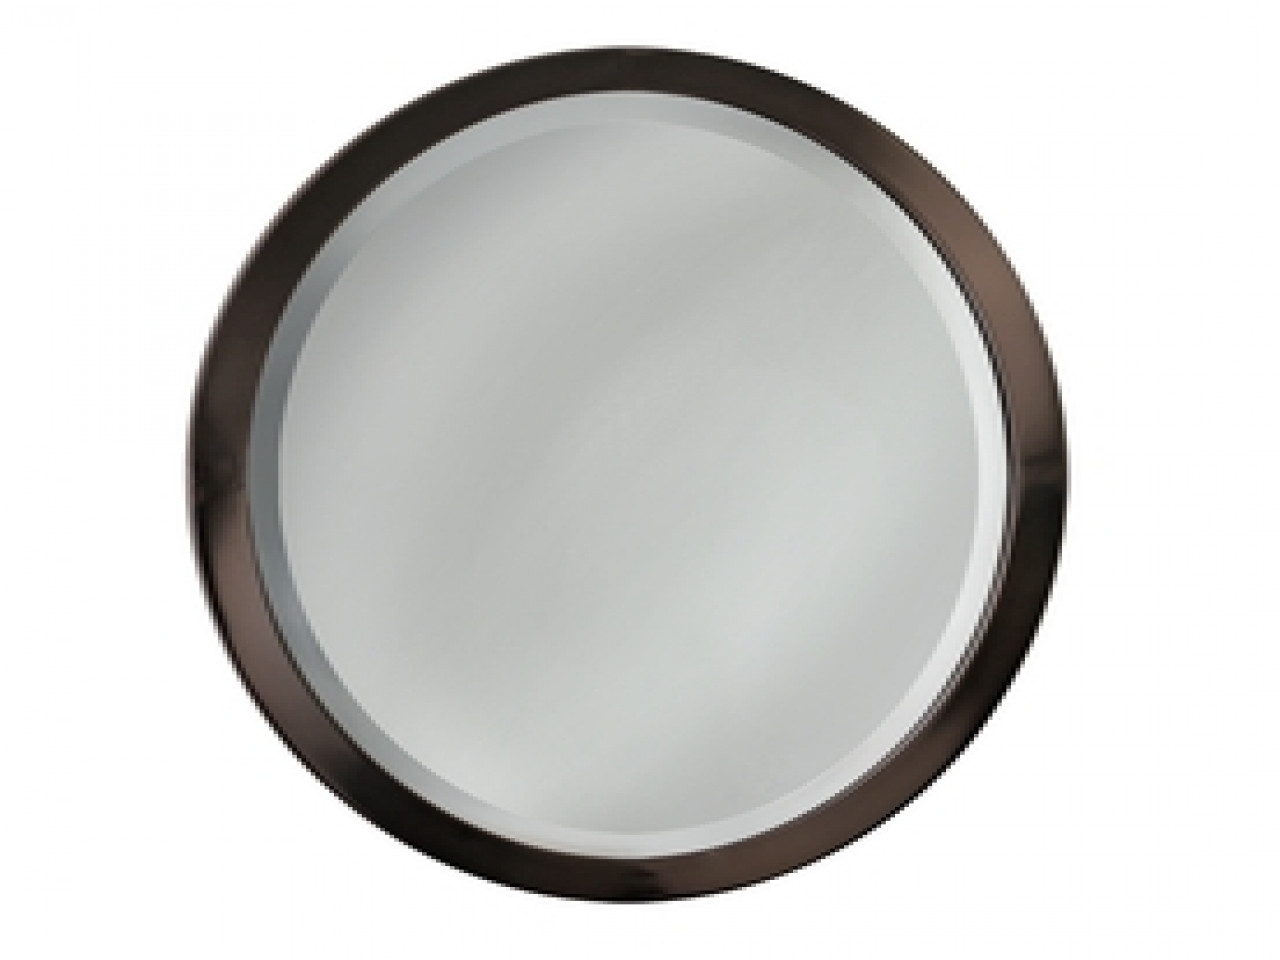 Oil Rubbed Bronze Bathroom Mirror
 Bathroom mirrors brushed nickel oil rubbed bronze